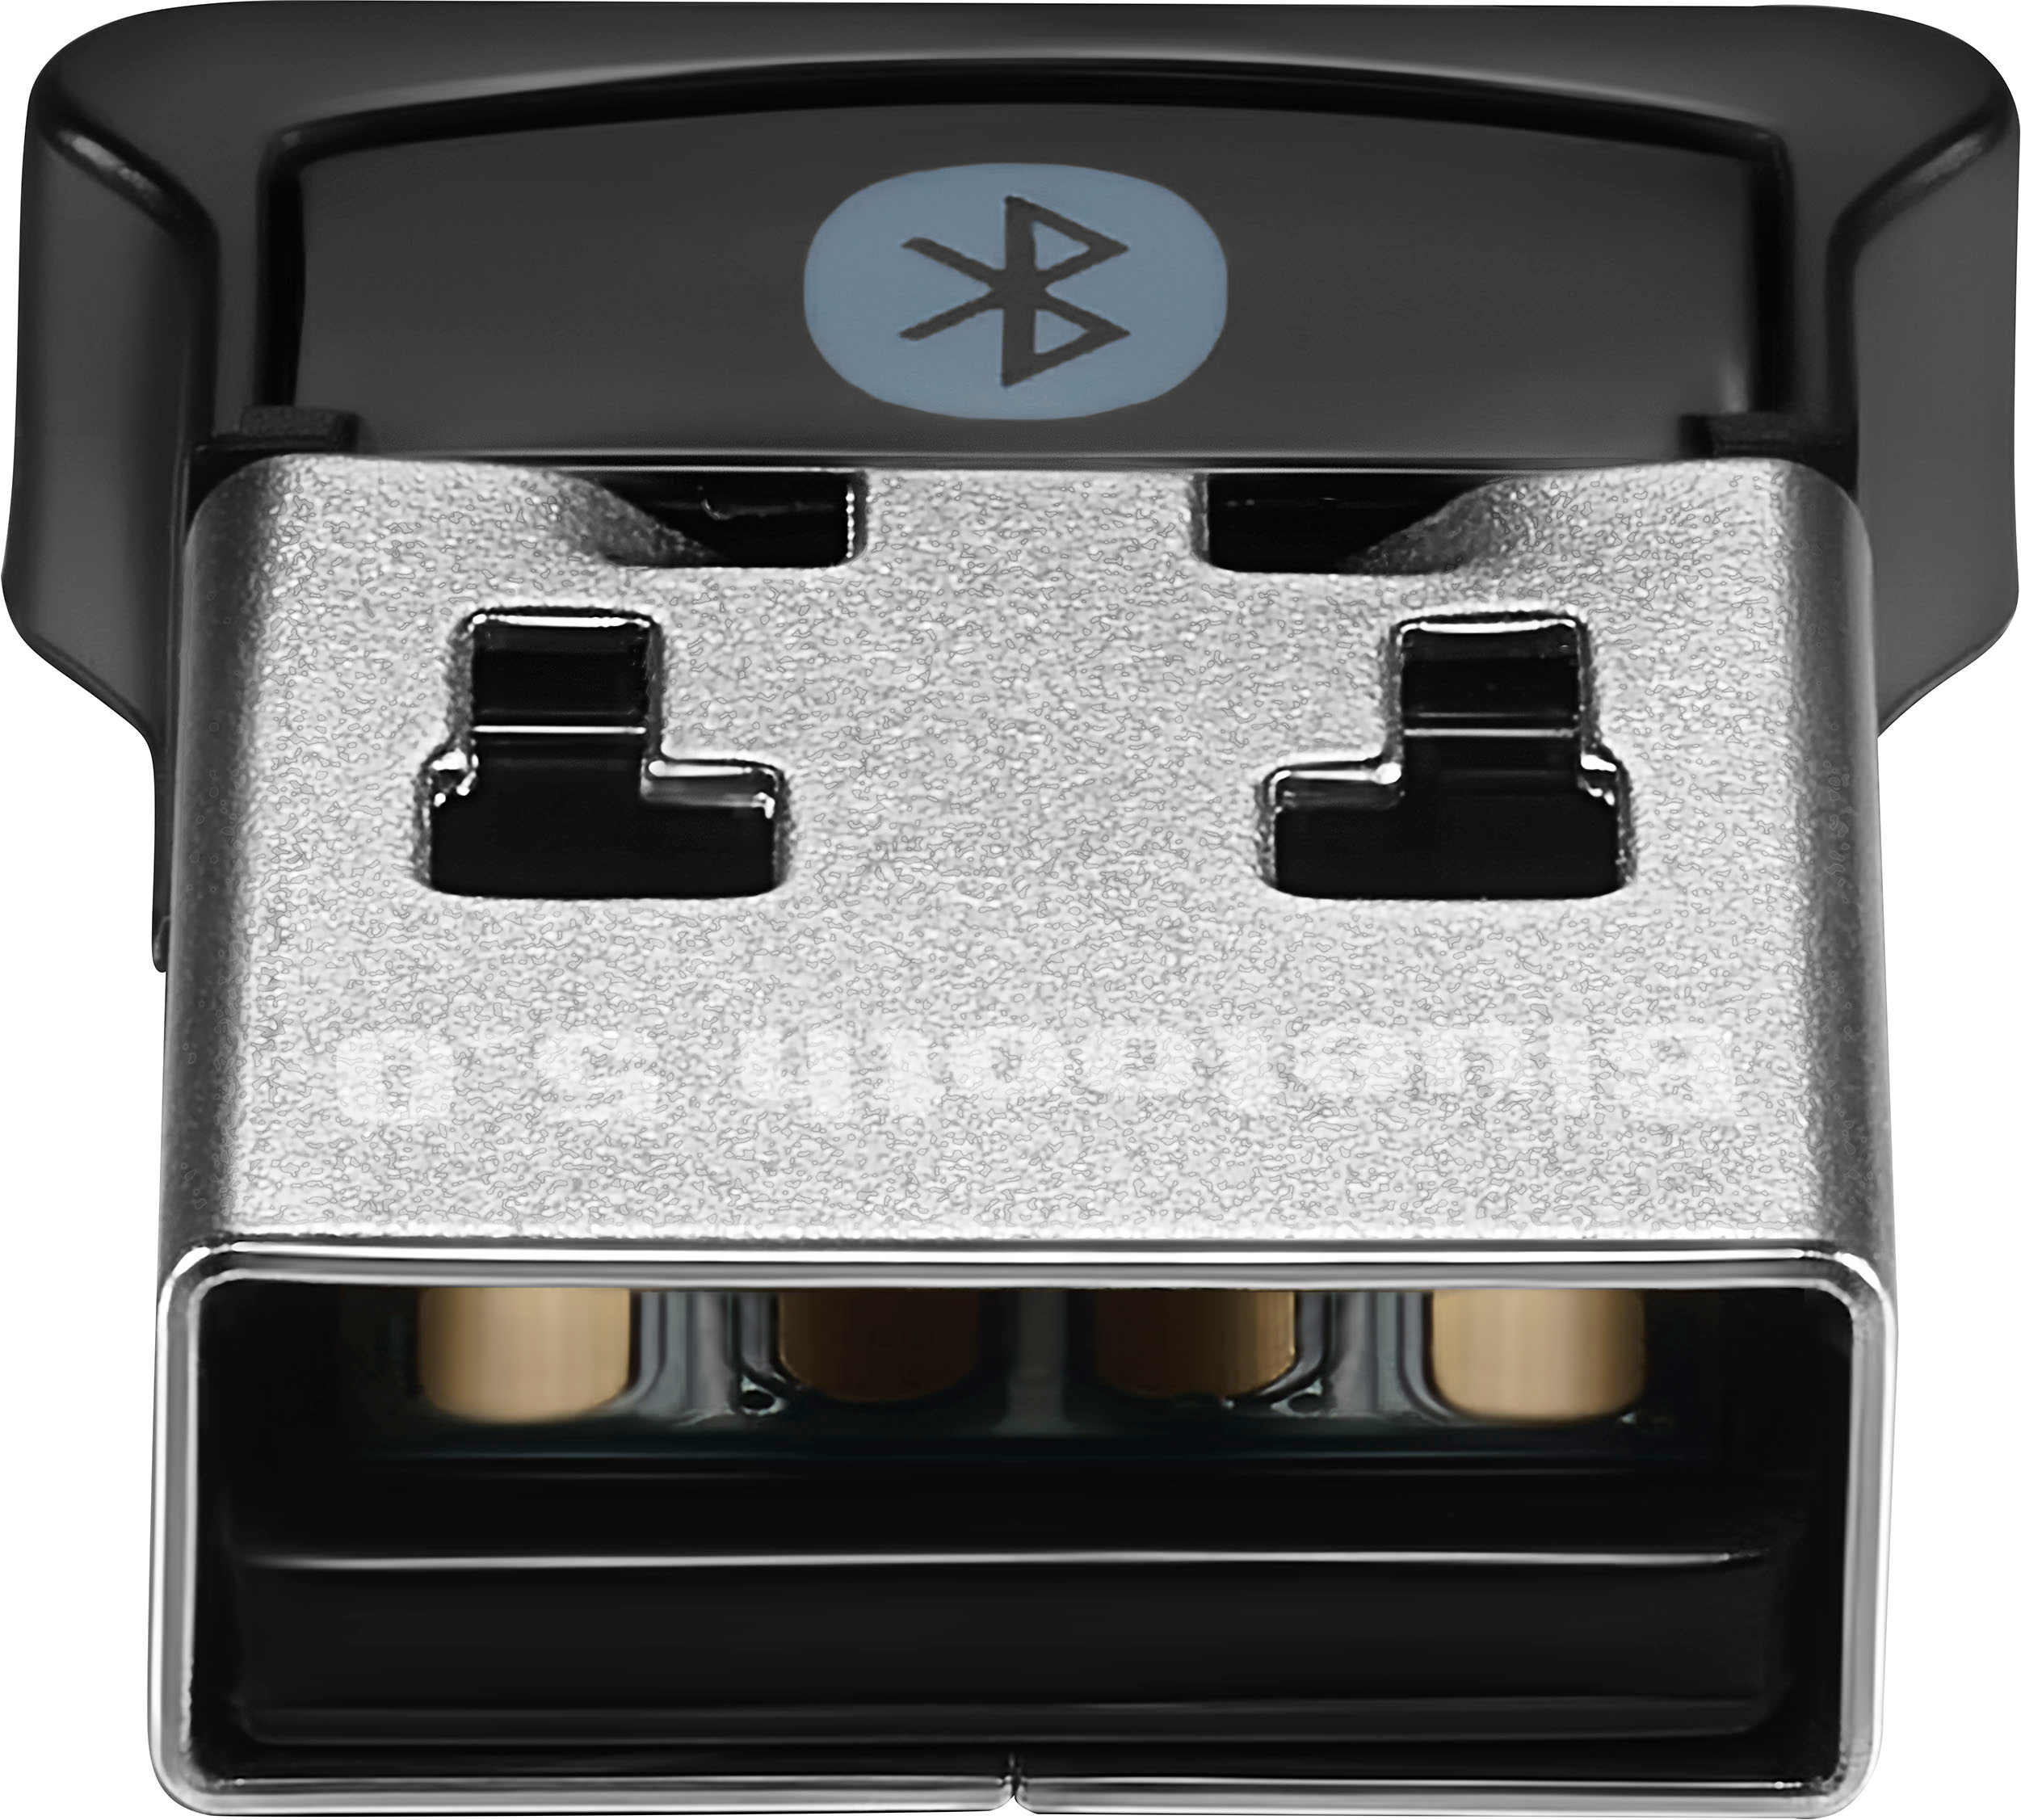 Usb Bluetooth Adapter - Best Buy